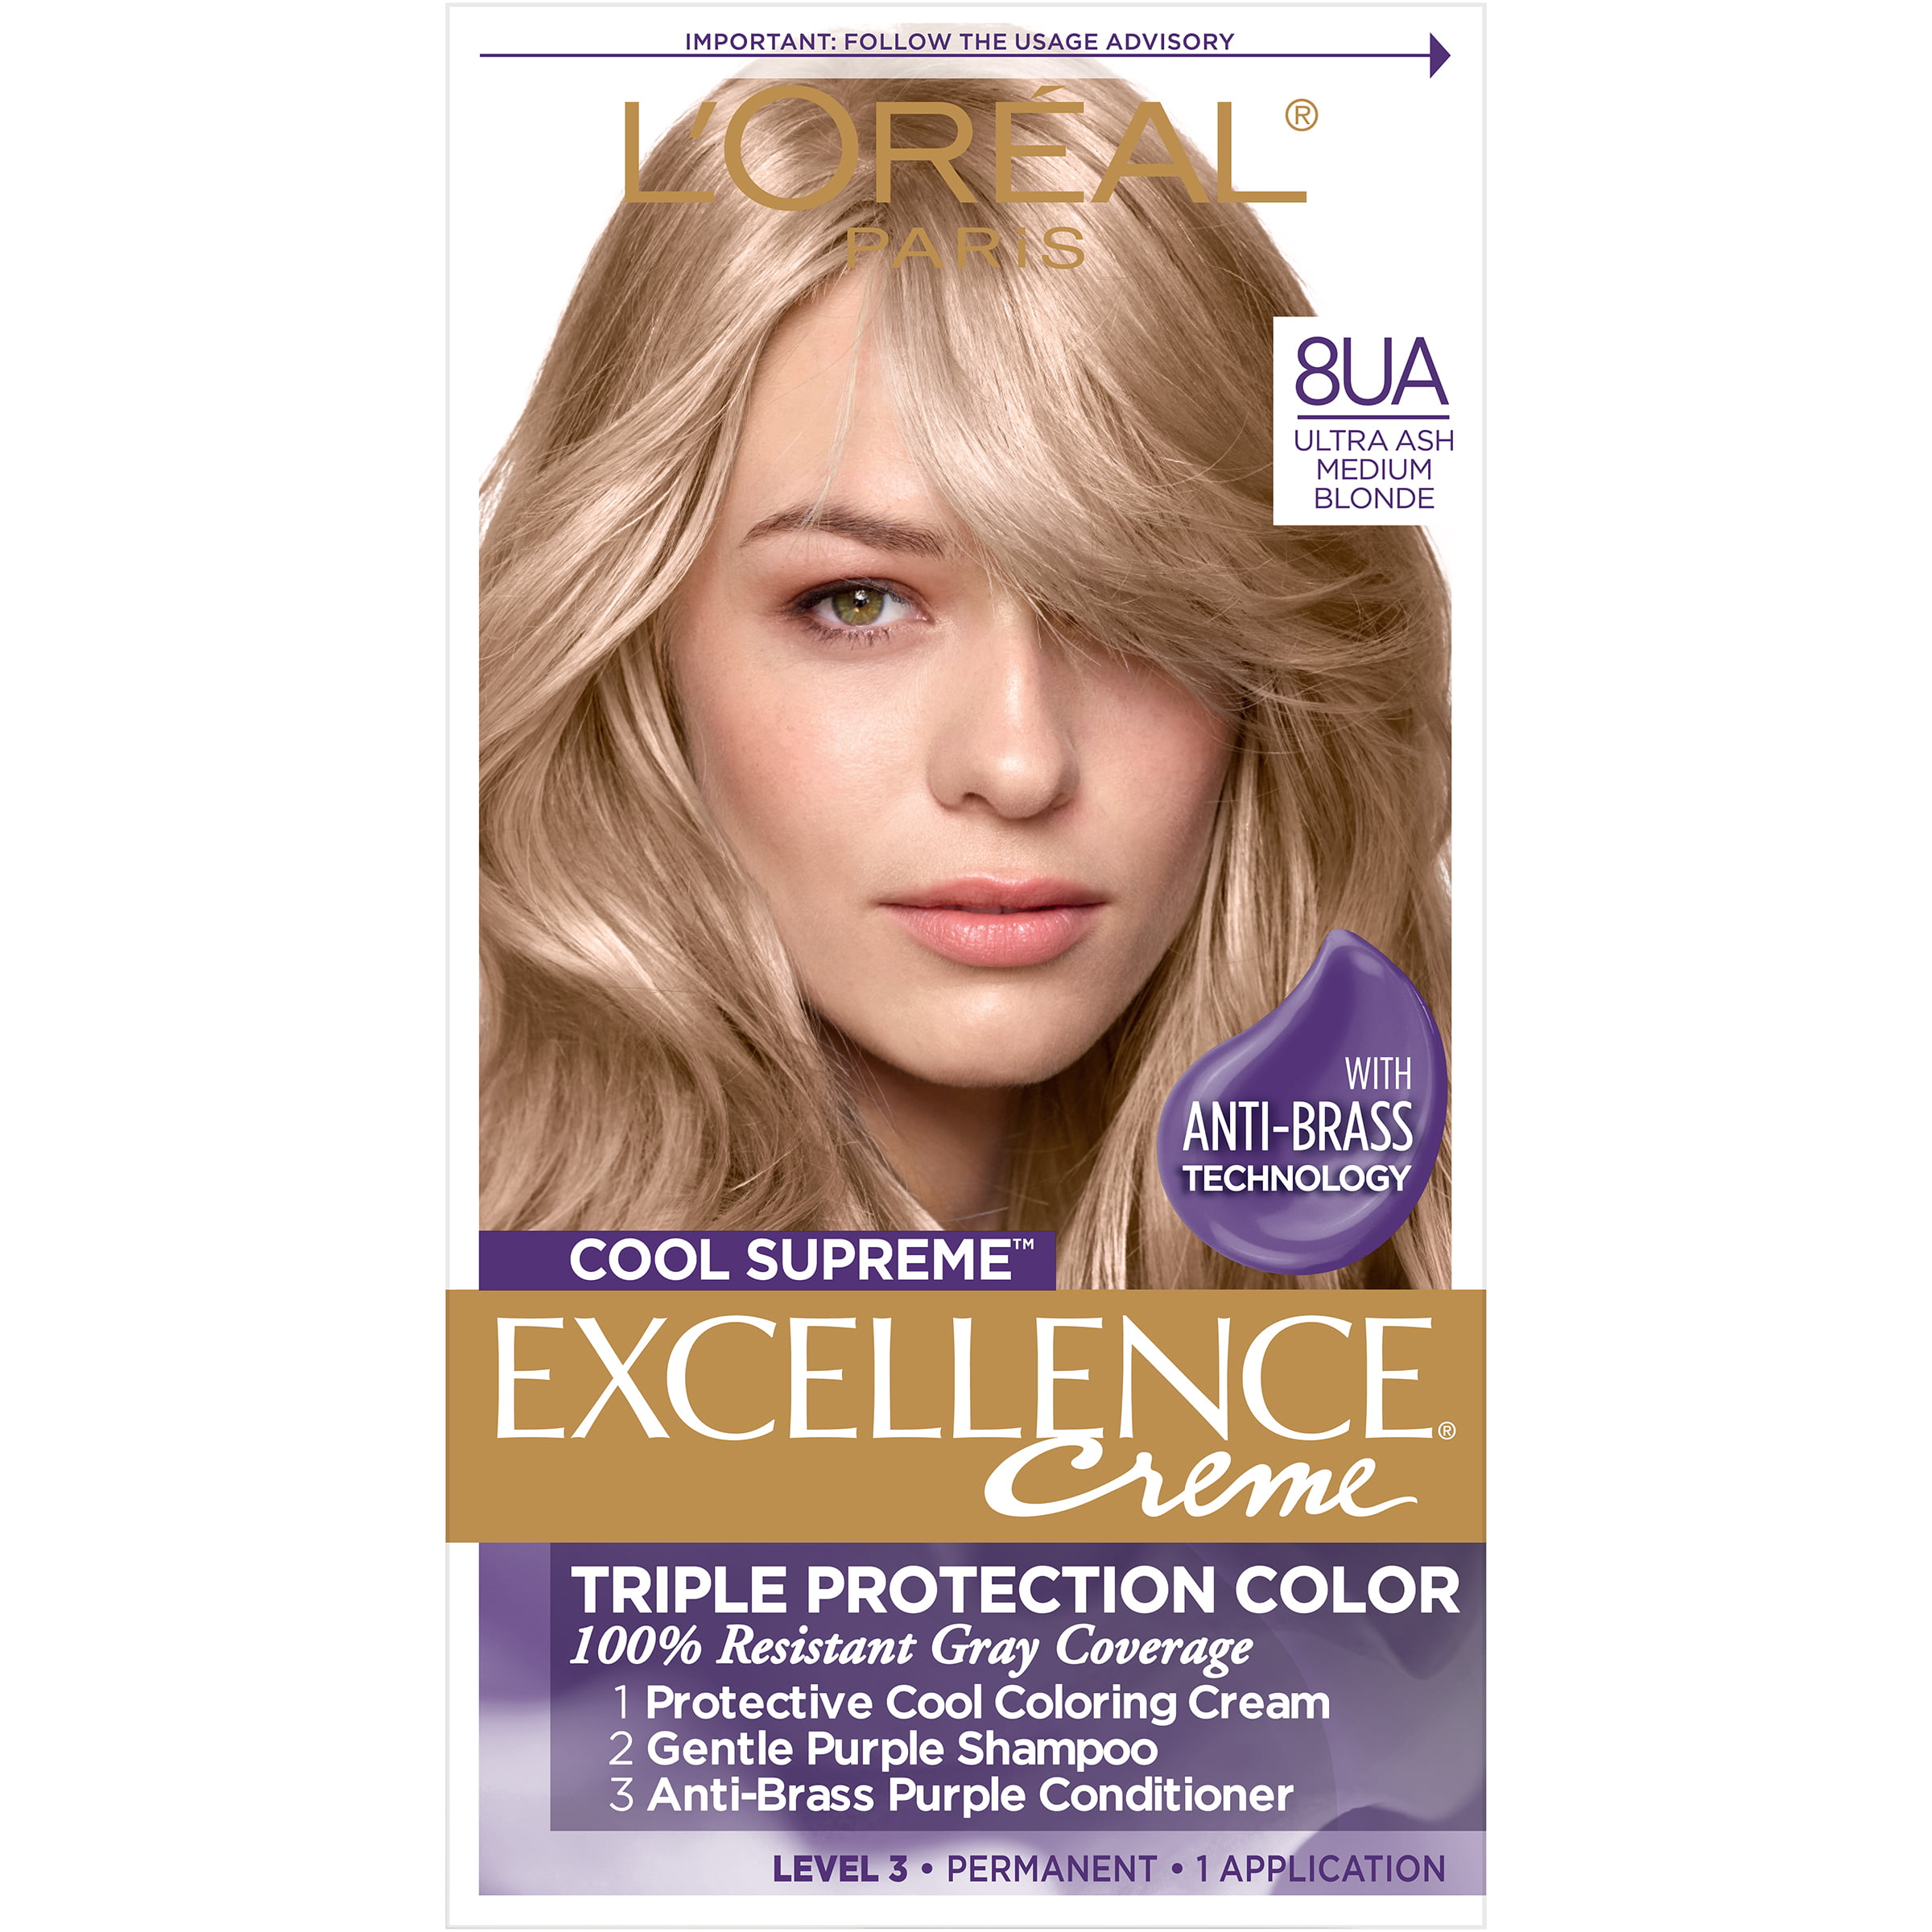 L'Oreal Paris Excellence Creme Permanent Hair Color, Ultra Ash Medium Blonde - image 1 of 10